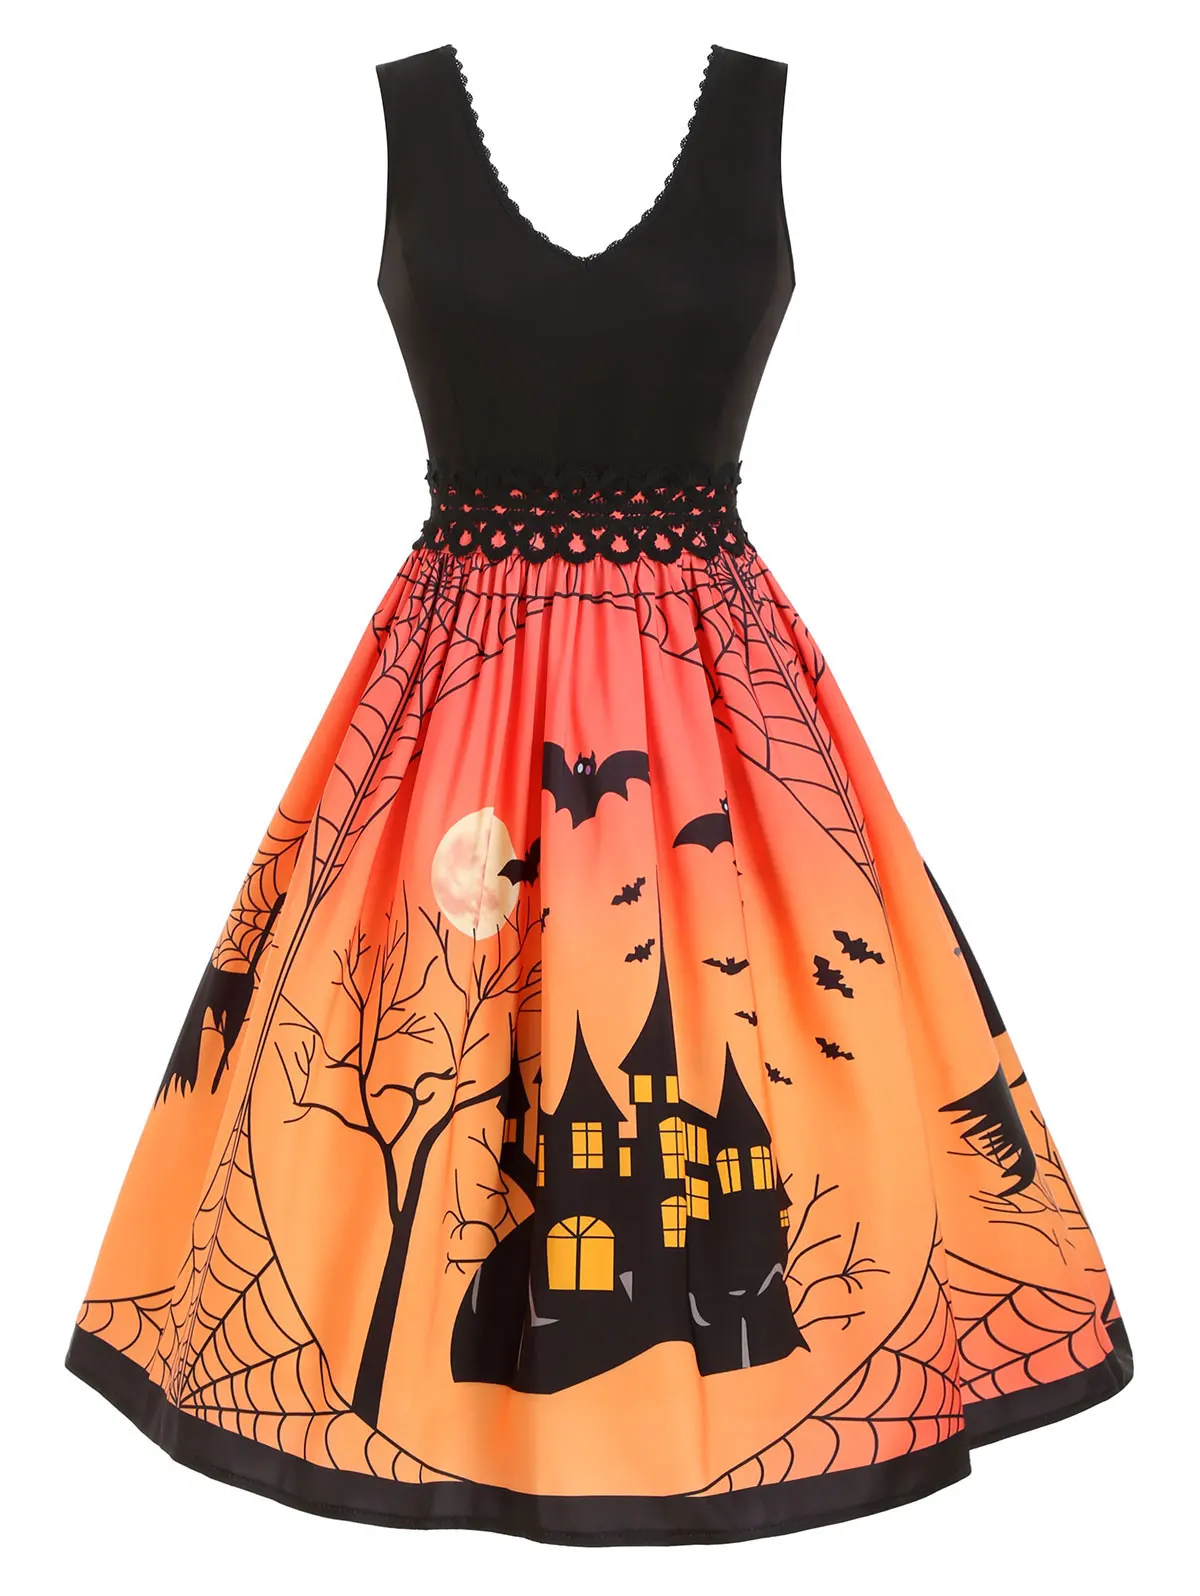 

Rosegal Plus Size Women Vintage Dress Sleeveless Tank Spider Web Halloween Pumpkin Print Dress Women Elegant Casual 1950s Dress